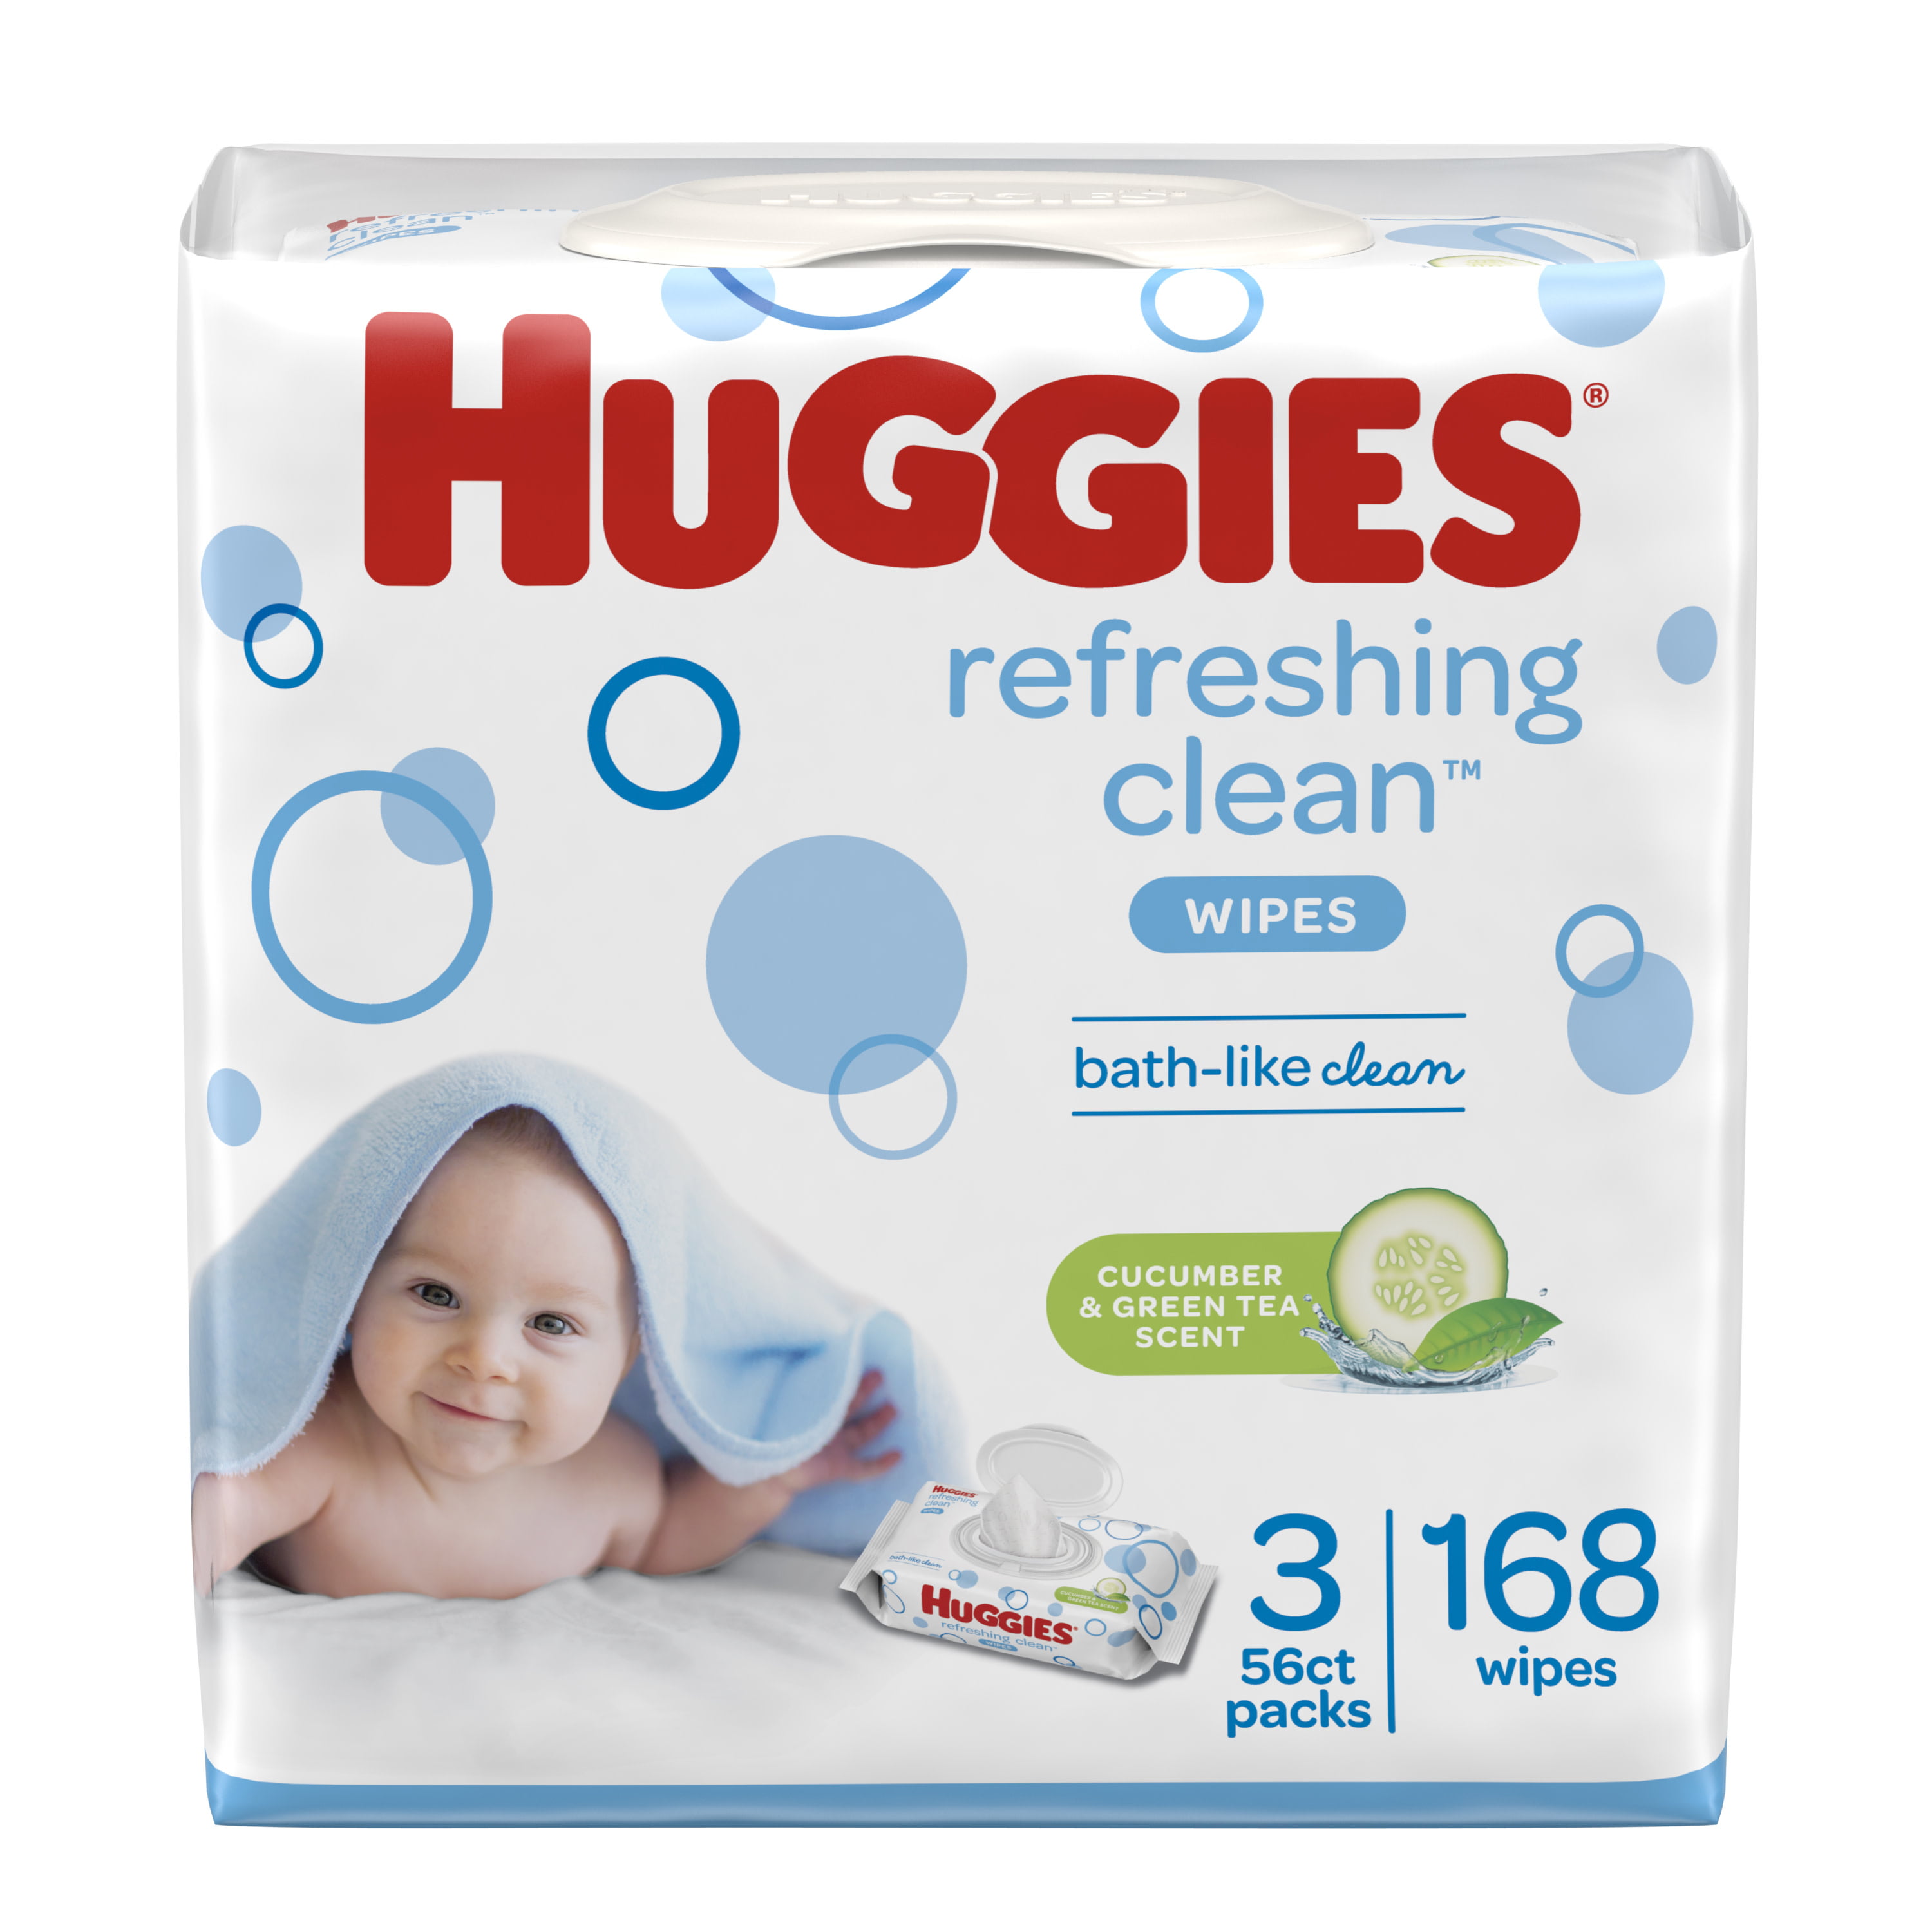 huggies jumbo pack wipes